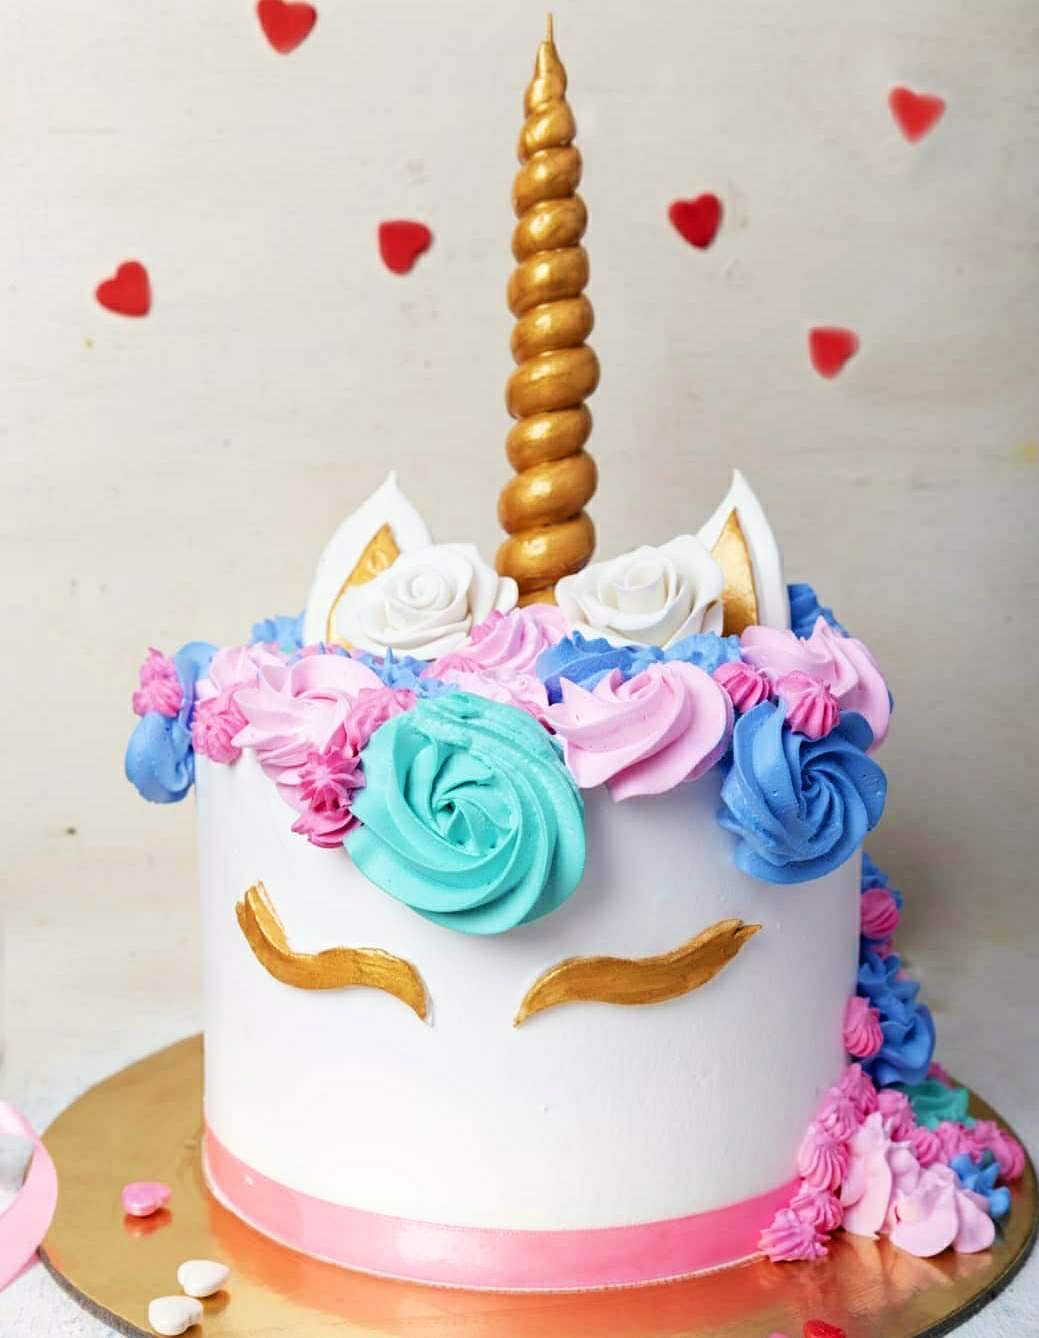 Cake,Cake decorating,Buttercream,Sugar paste,Icing,Fondant,Birthday cake,Food,Royal icing,Dessert